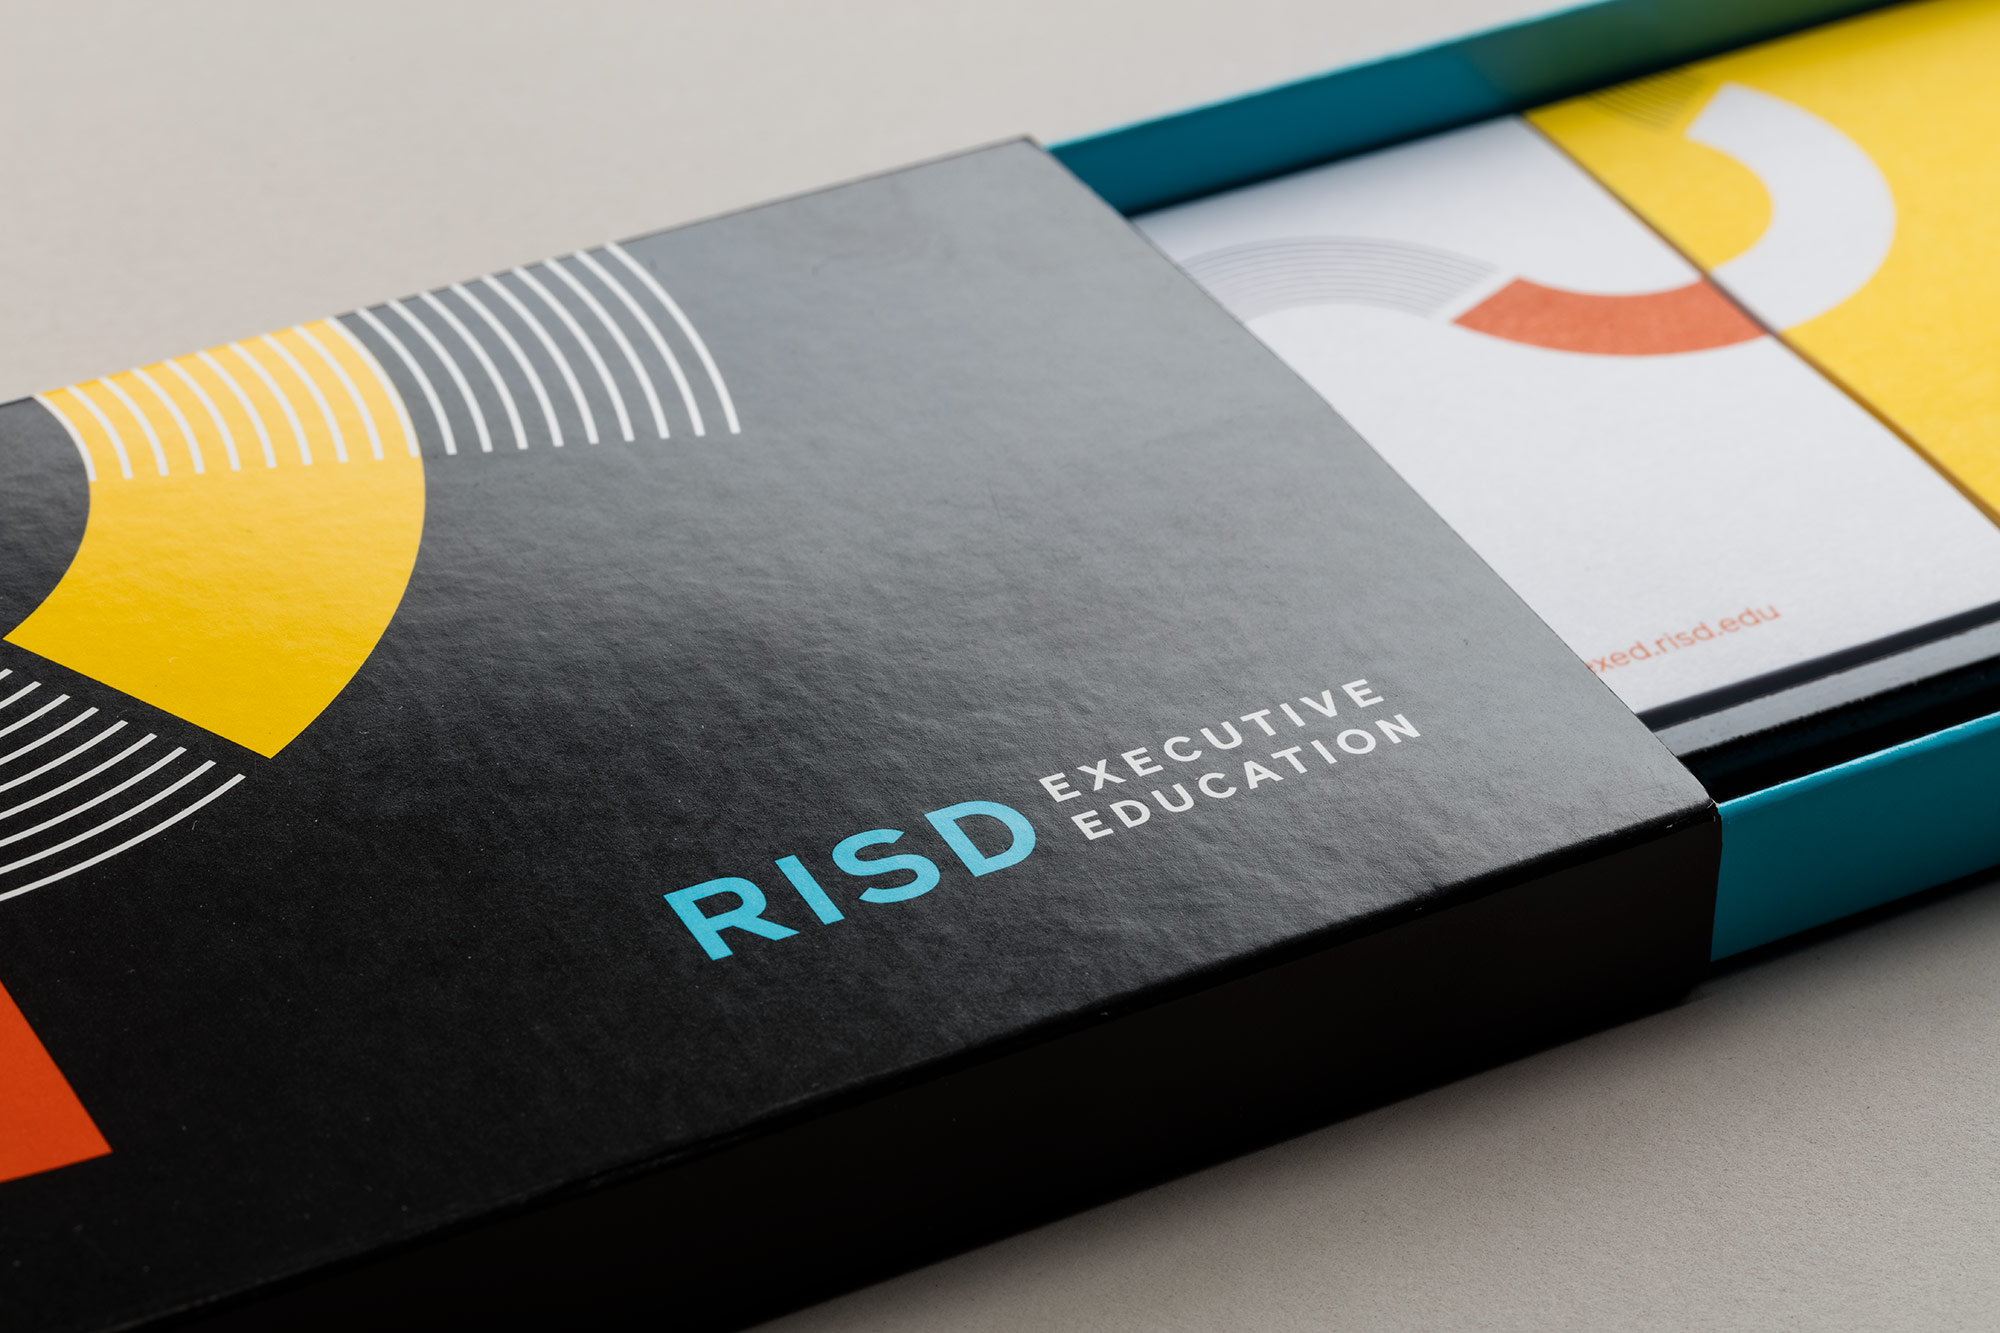 RISD Executive Education Branding